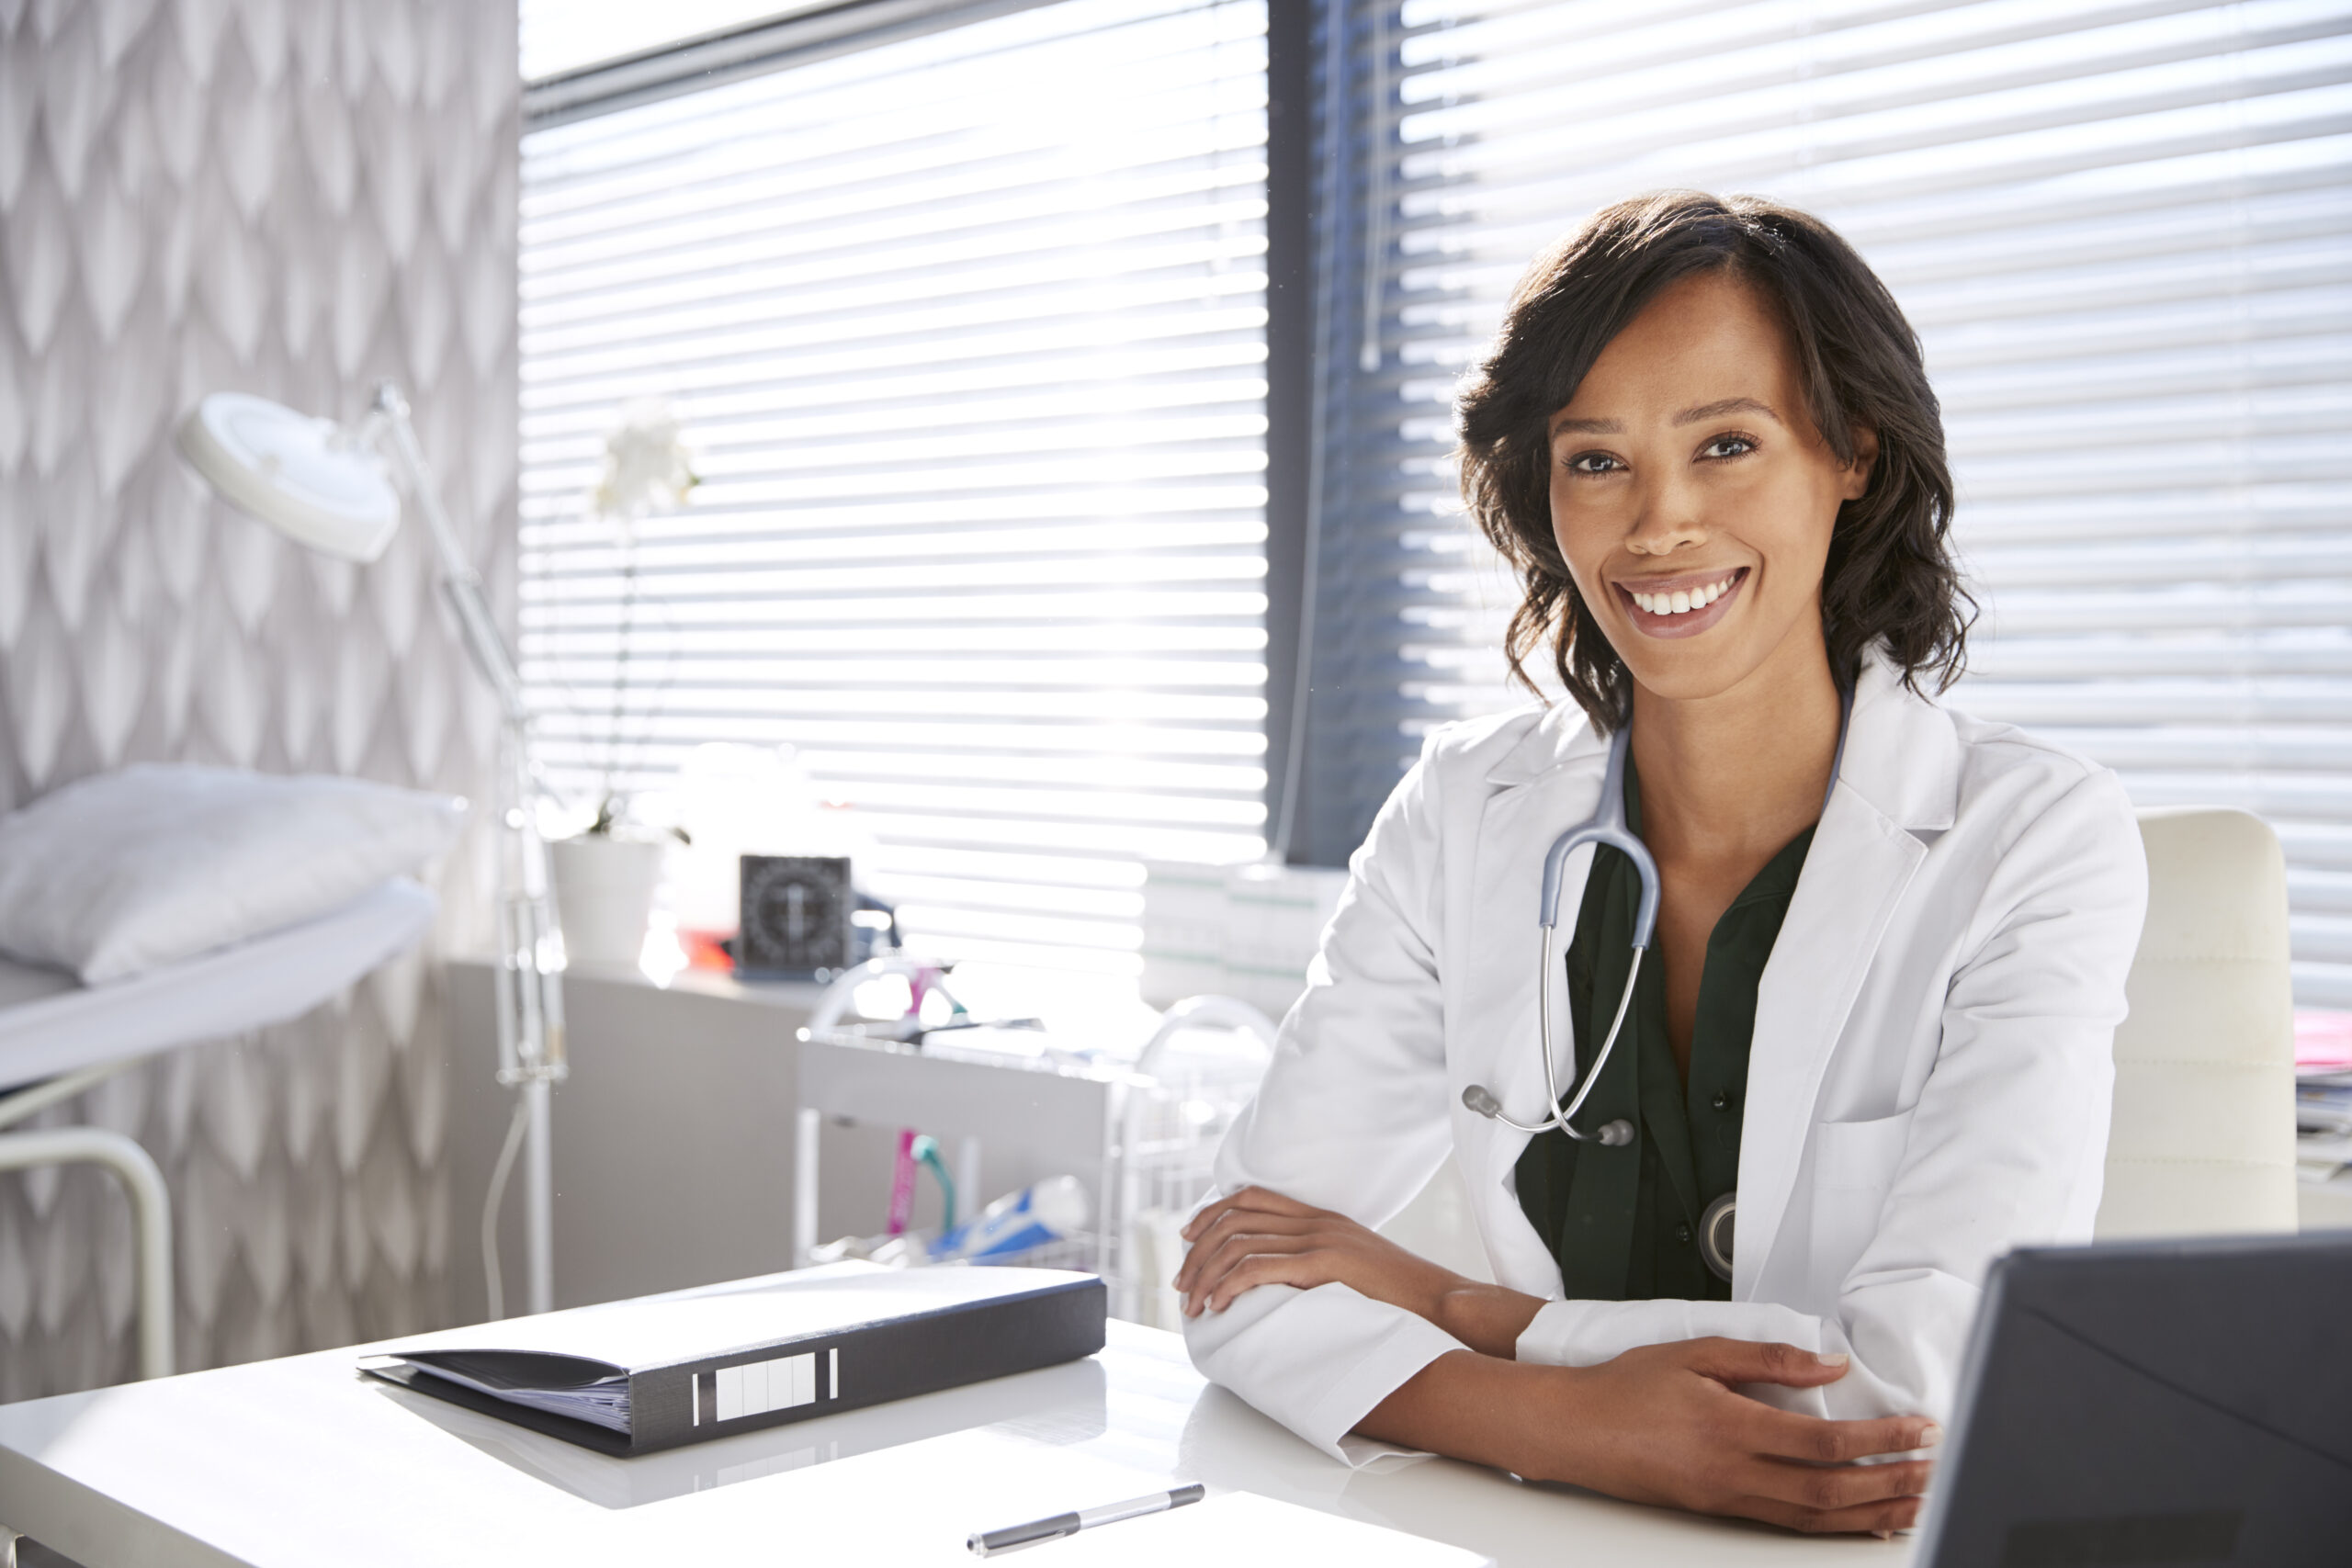 Portrait of smiling female plastic surgeon wearing white coat with stethoscope